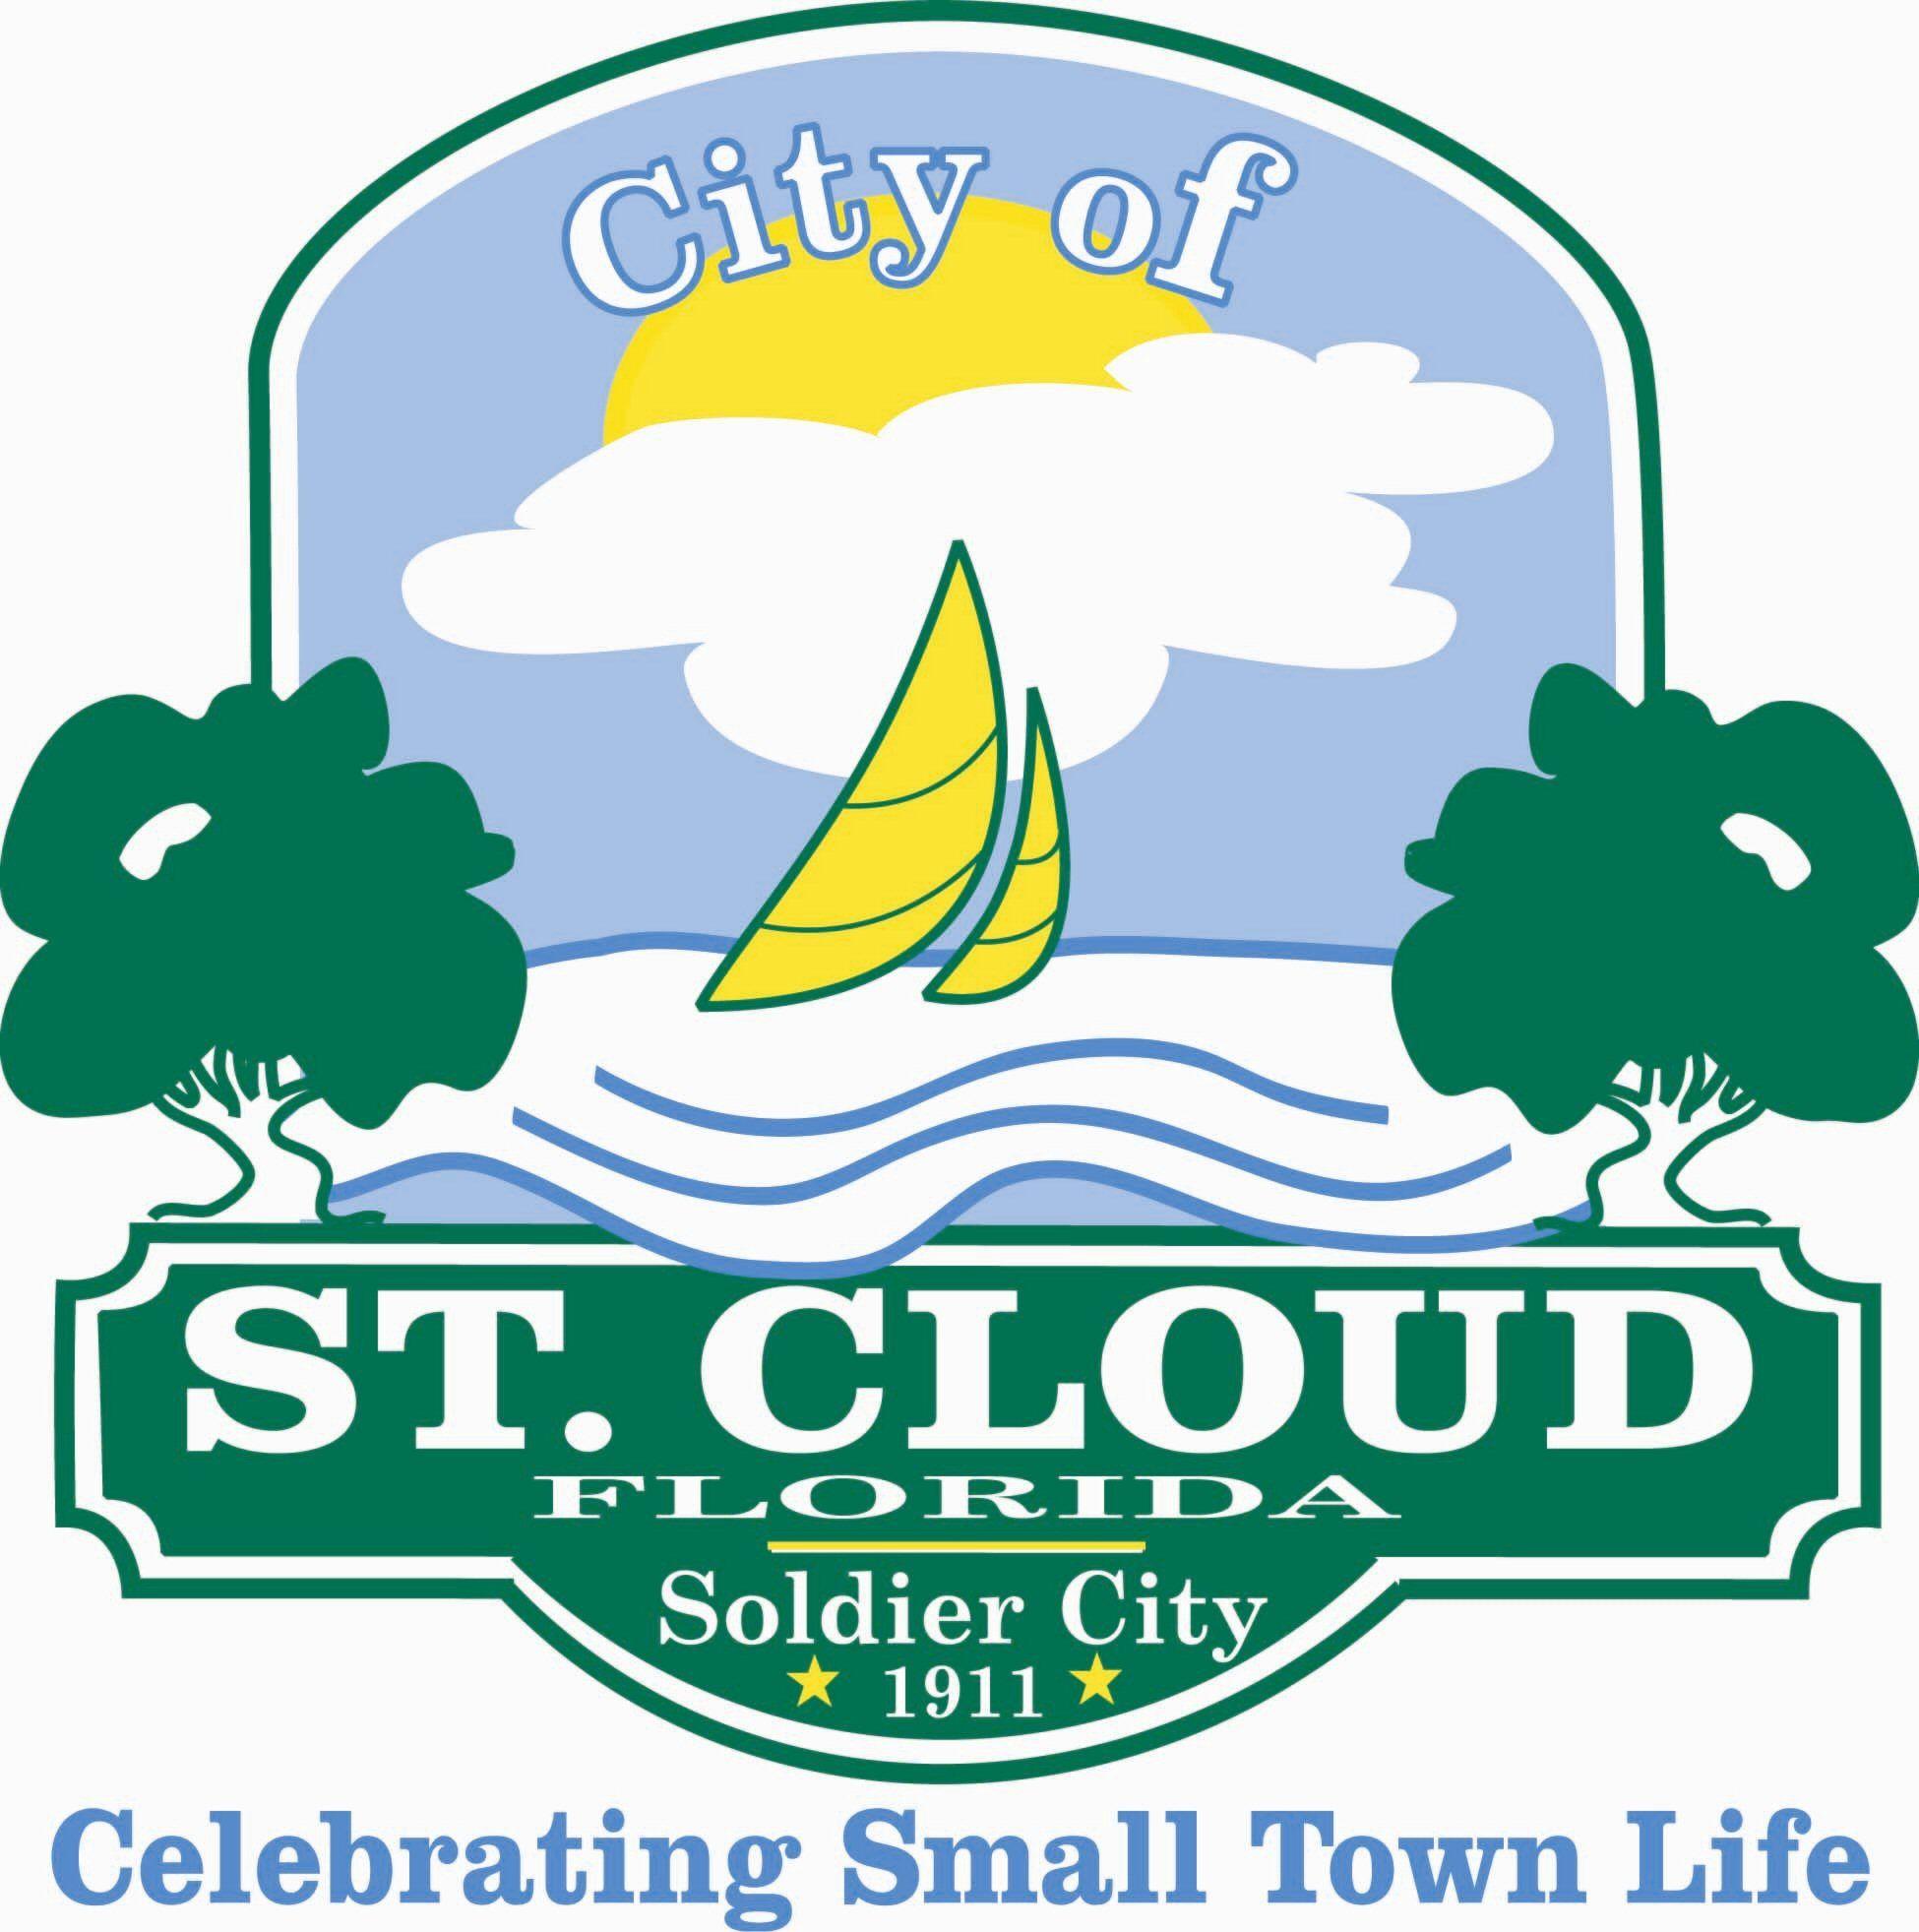 St. Cloud Logo - File:St Cloud Logo JPG.jpg - Wikimedia Commons